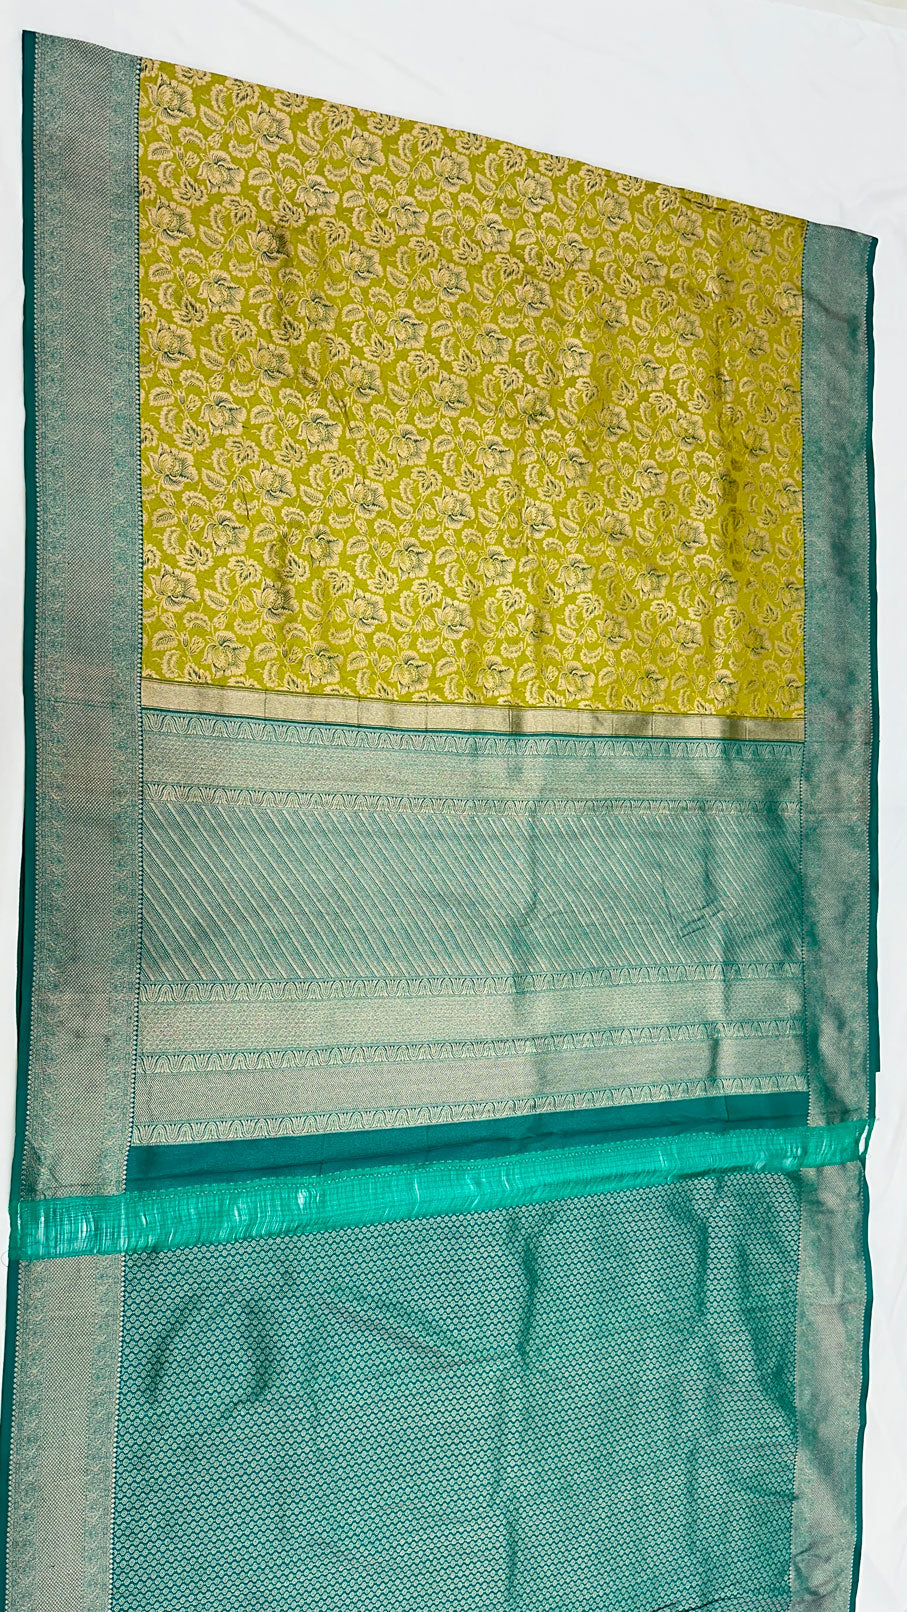 Kanchipuram Bridal Silk Saree with Light Green Body with Ramar Green Border, Pallu, Blouse